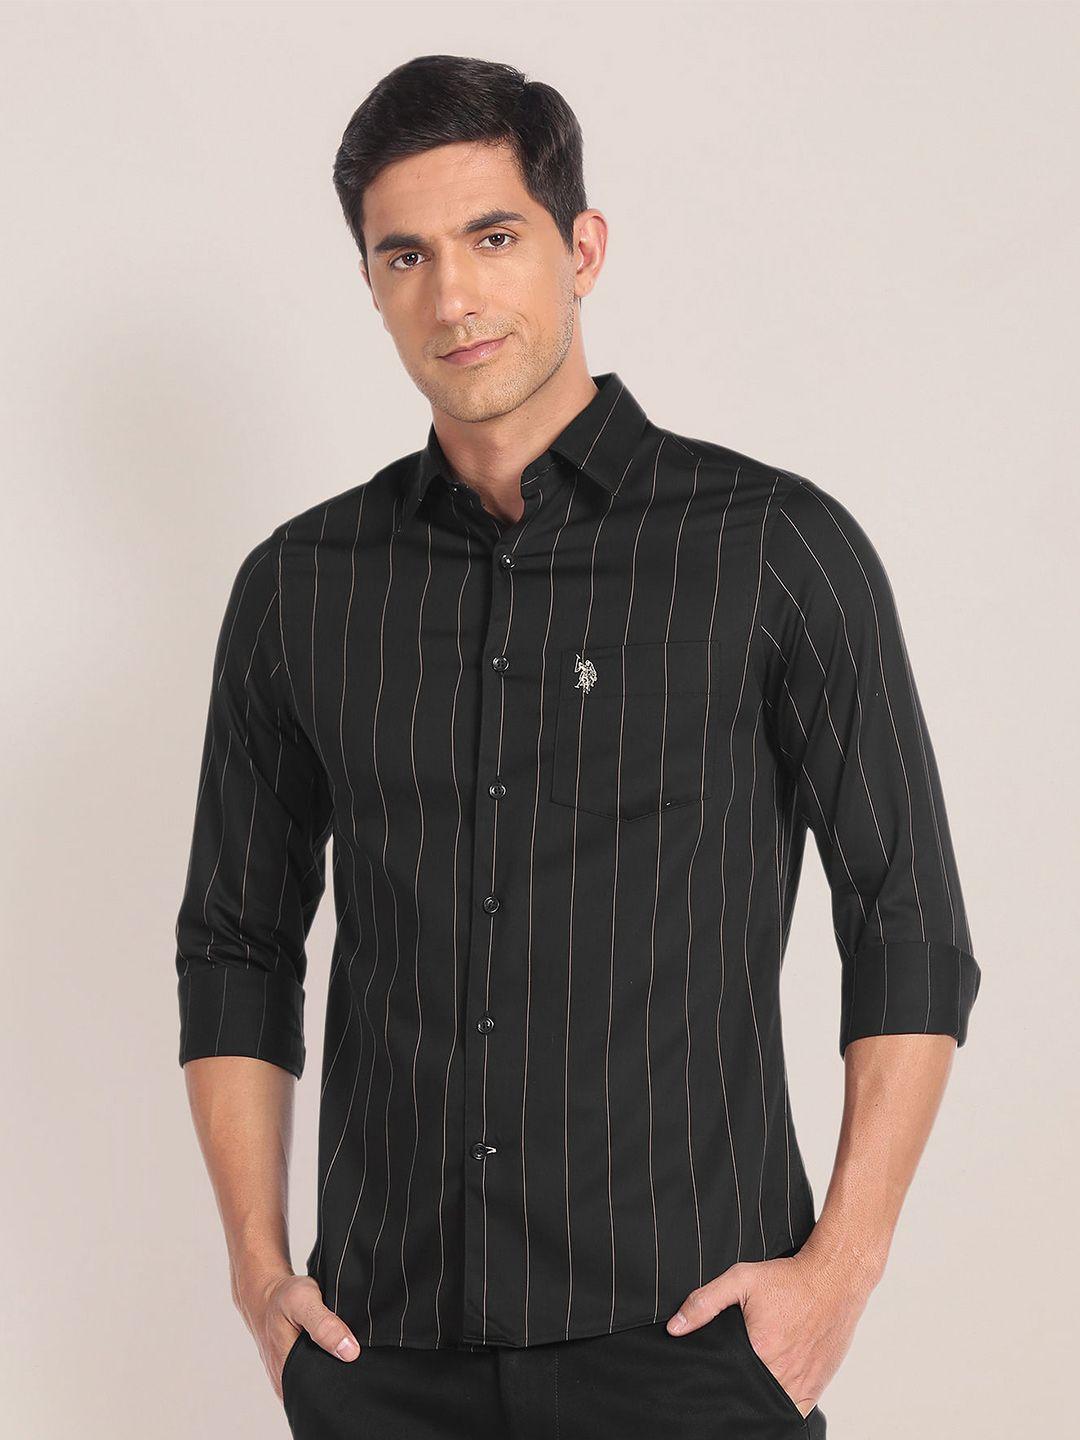 u.s. polo assn. men black opaque striped casual shirt